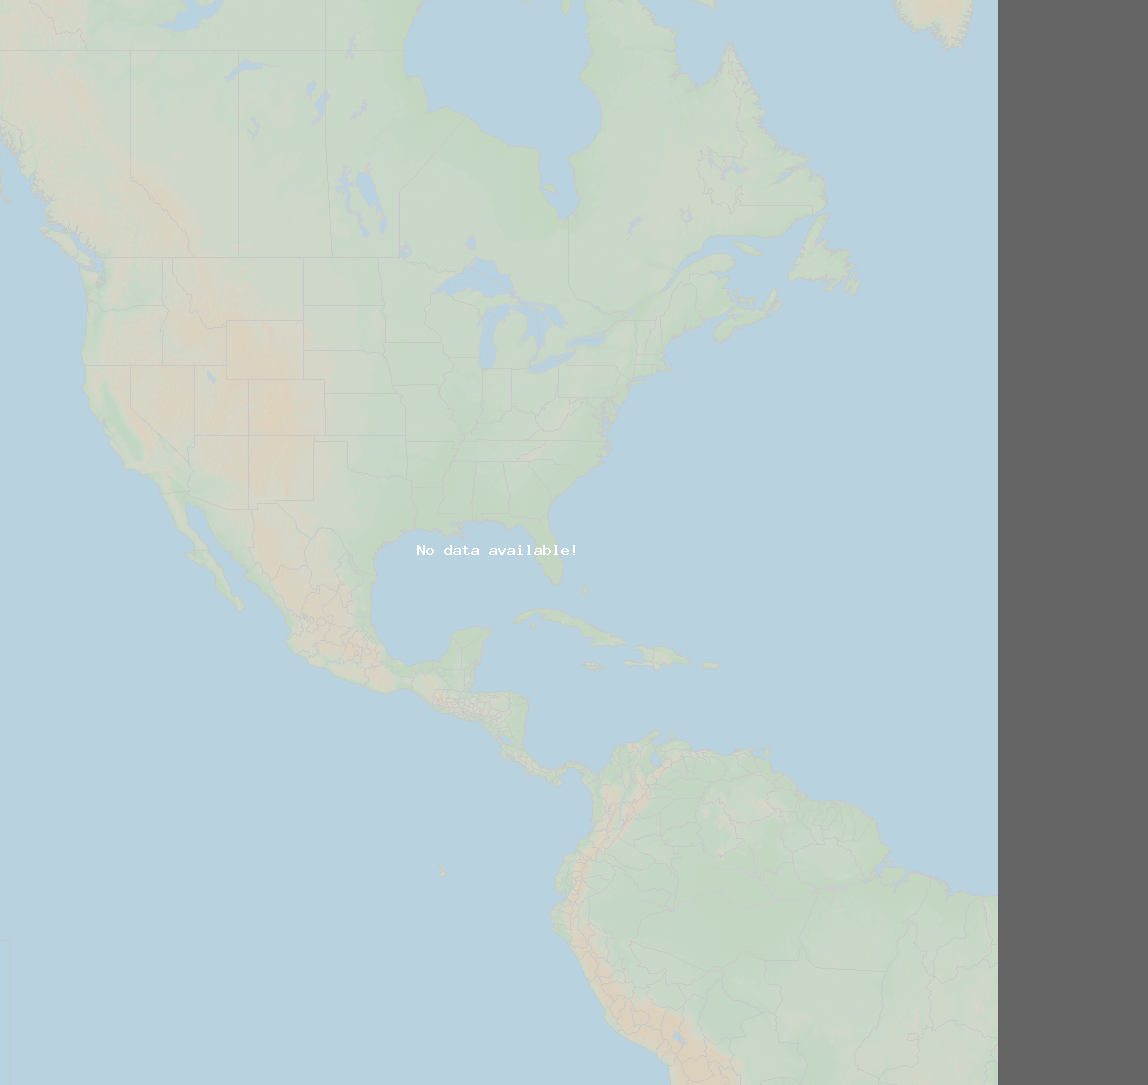 Andel blixtar (Station Haleakala) North America 2021 September